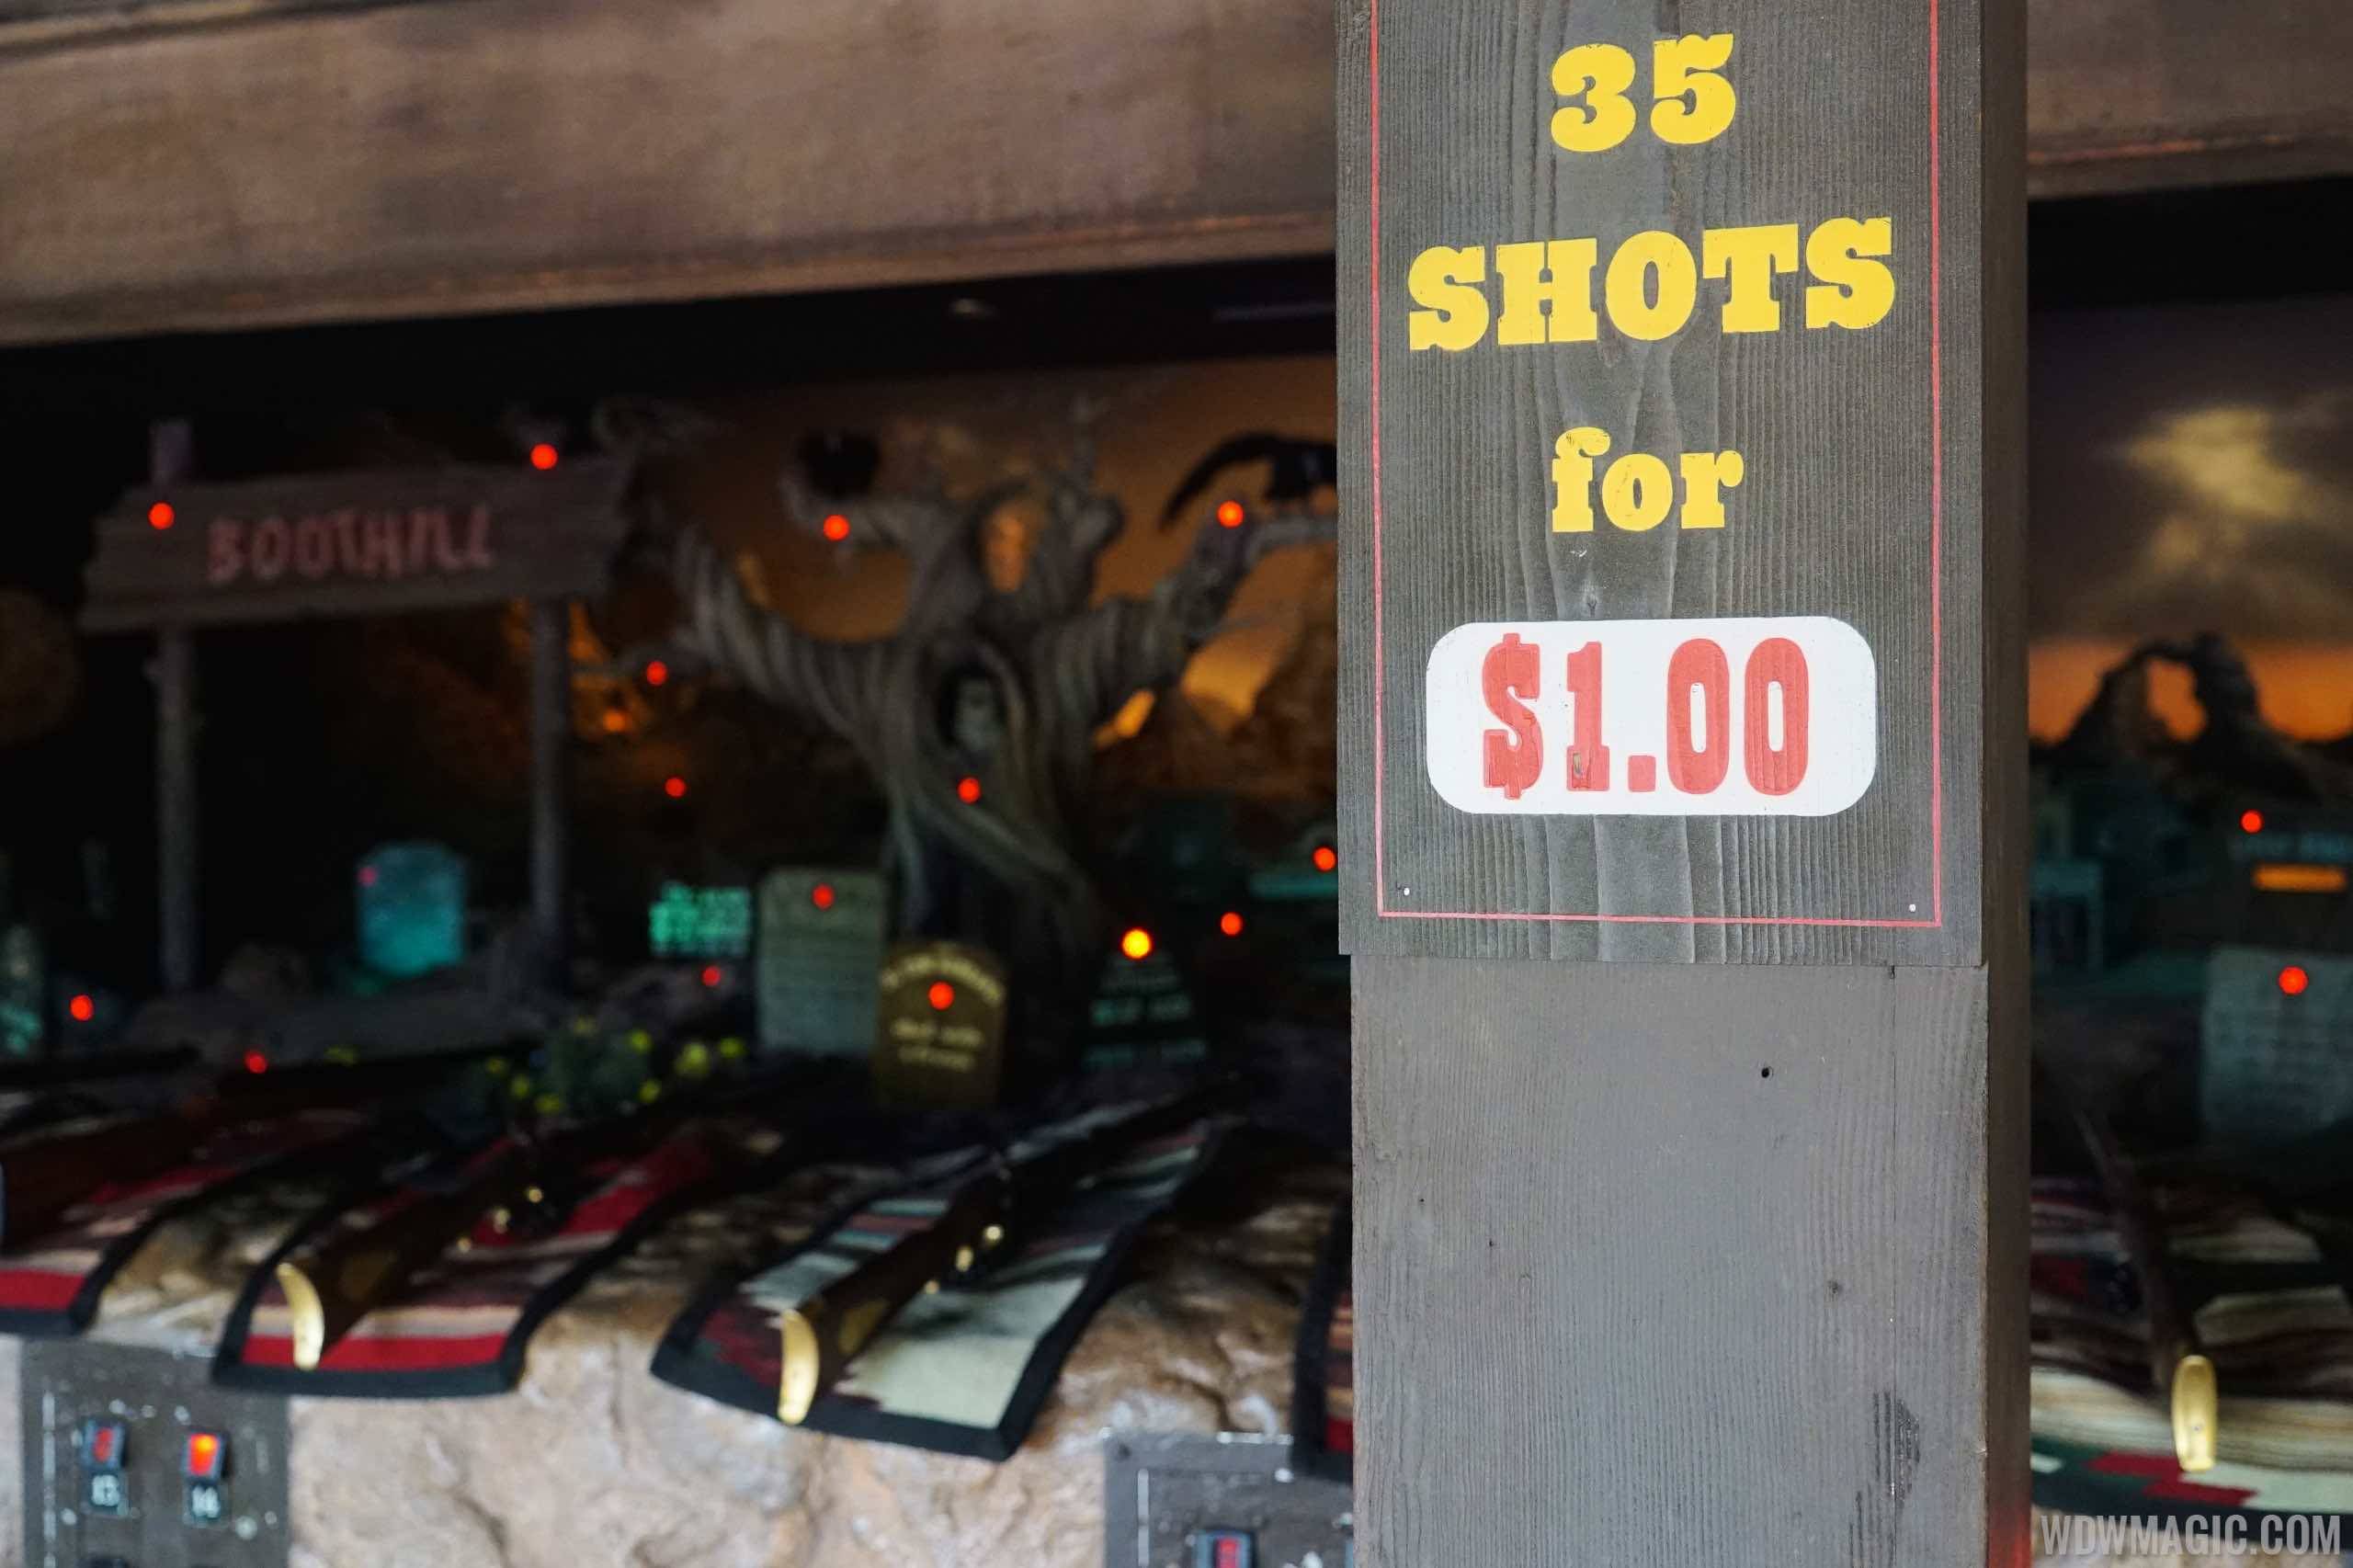 Frontierland Shootin' Arcade pricing